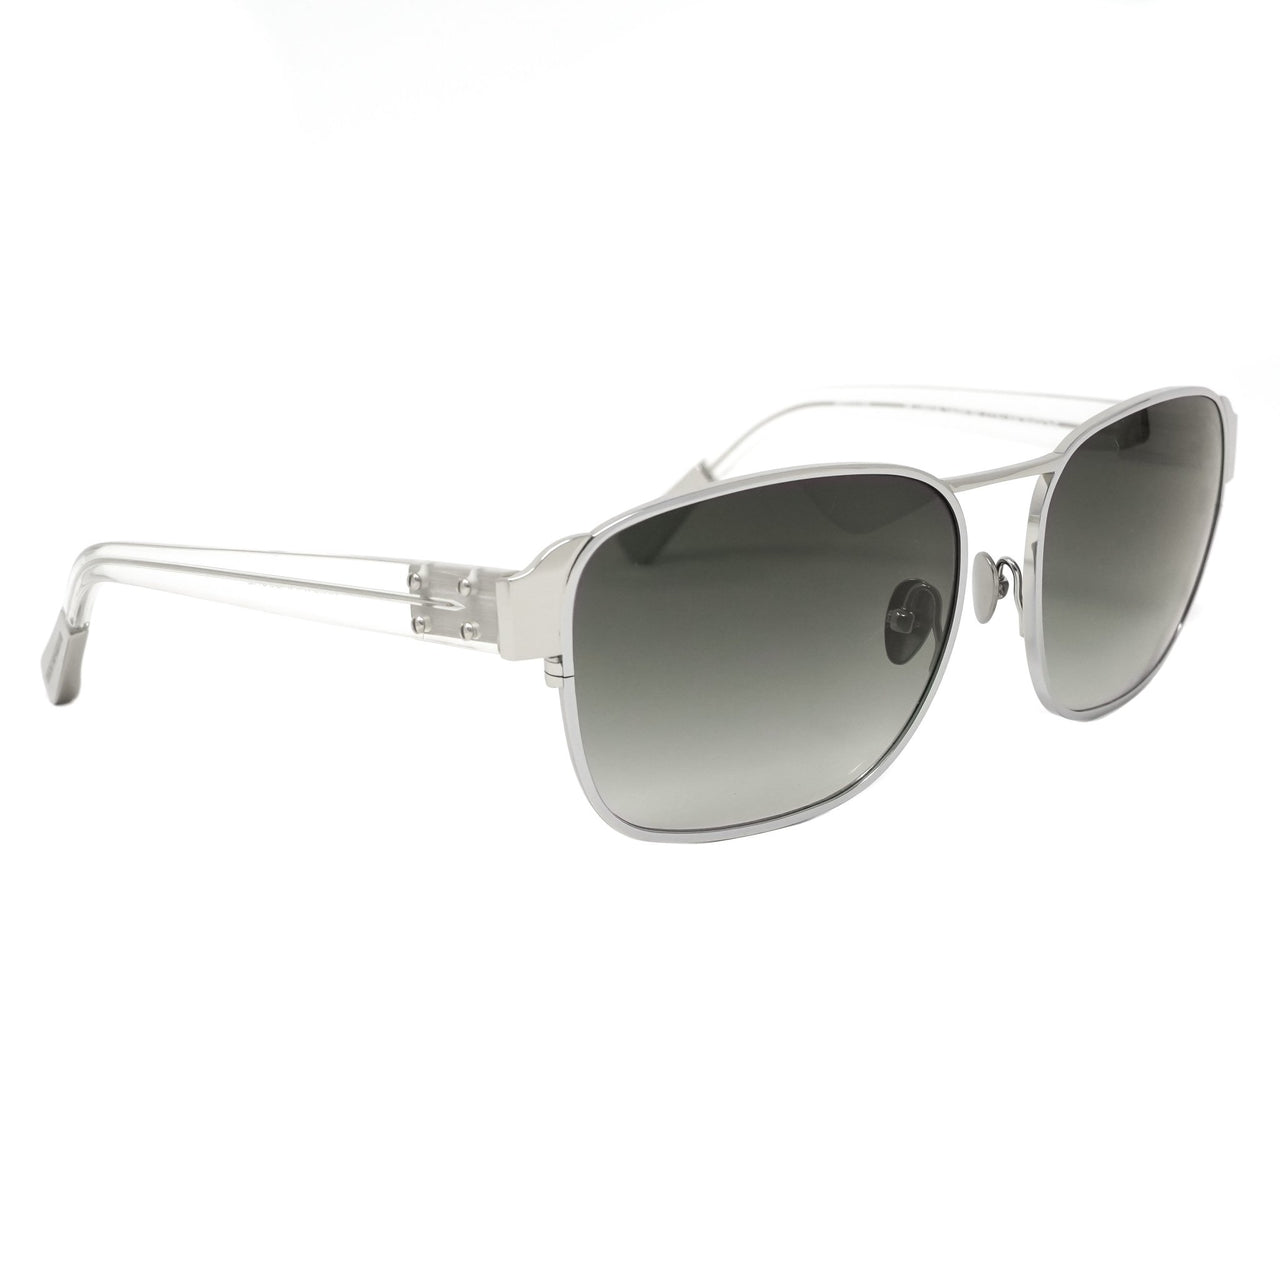 Kris Van Assche Sunglasses D-Frame Silver and Grey - Watches & Crystals